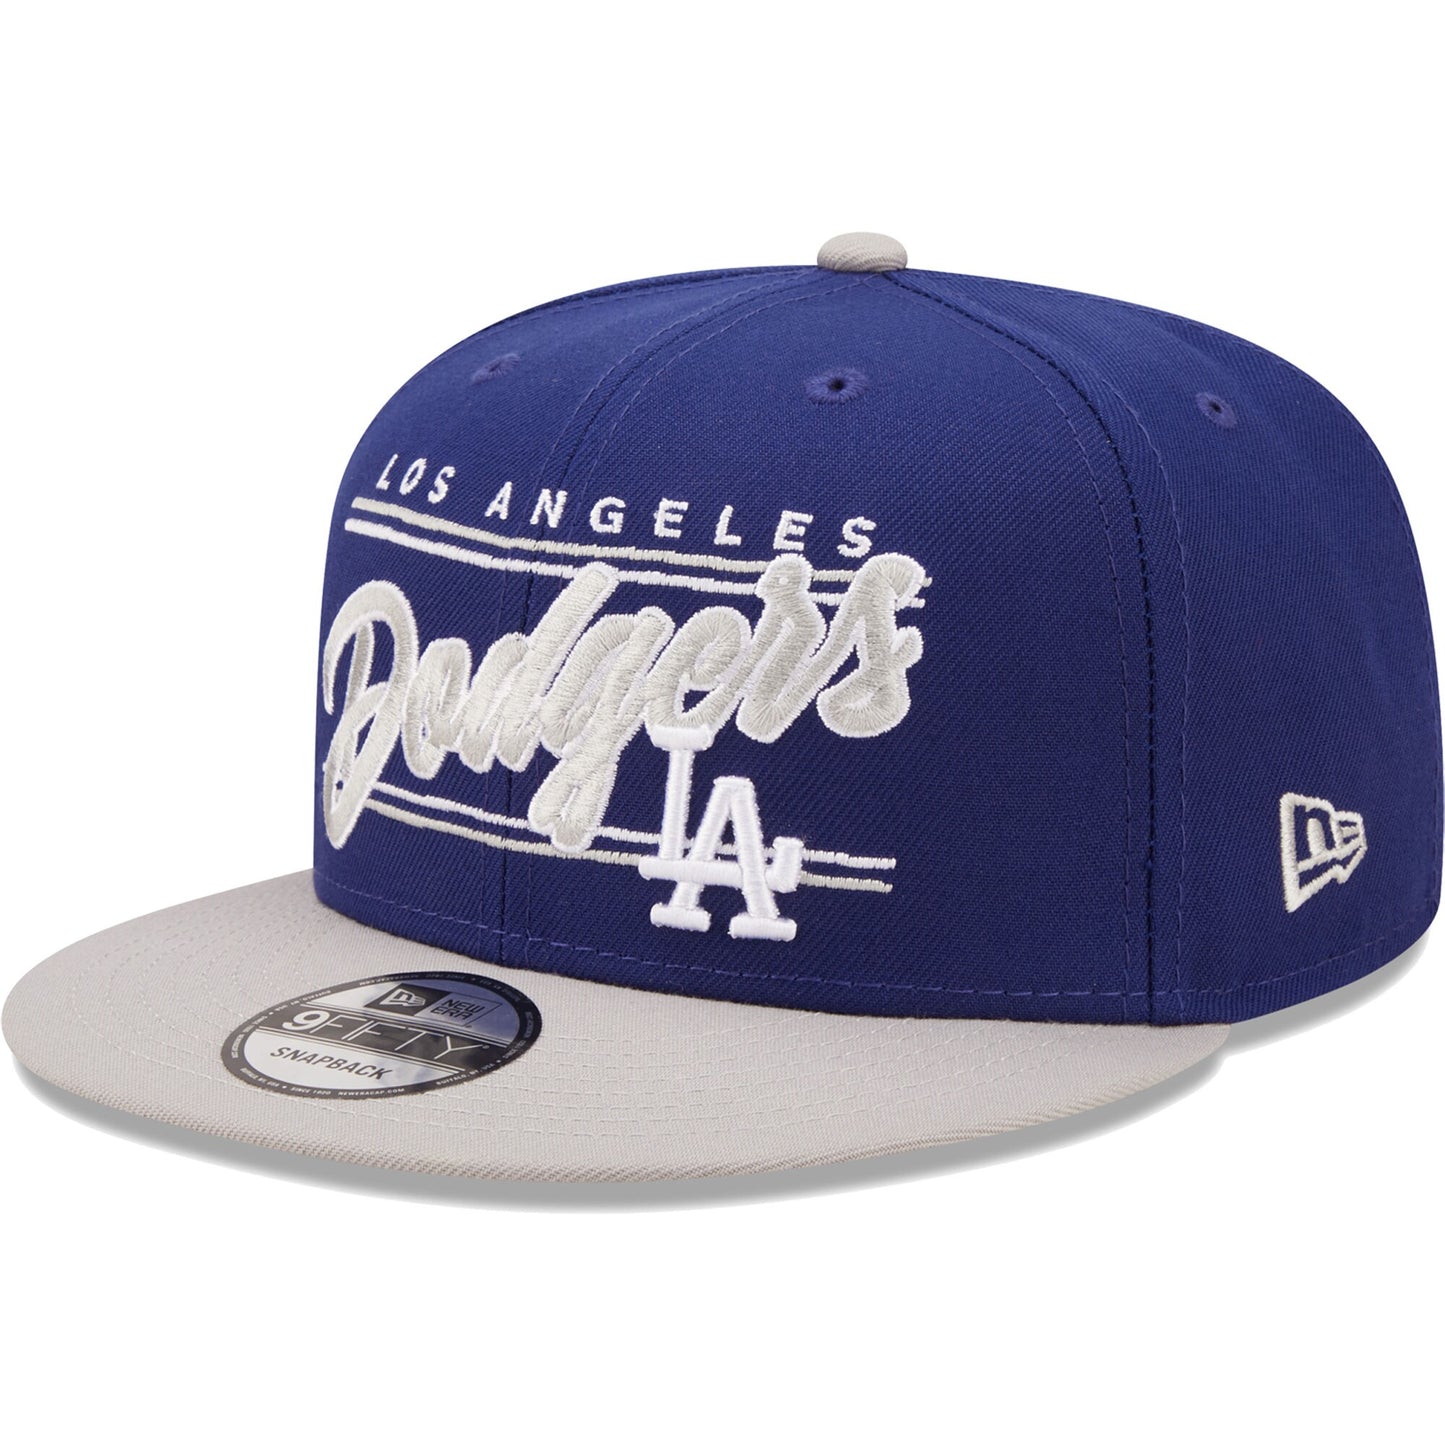 Men's Los Angeles Dodgers New Era Royal/Charcoal Team Script 9FIFTY Adjustable Snapback Hat